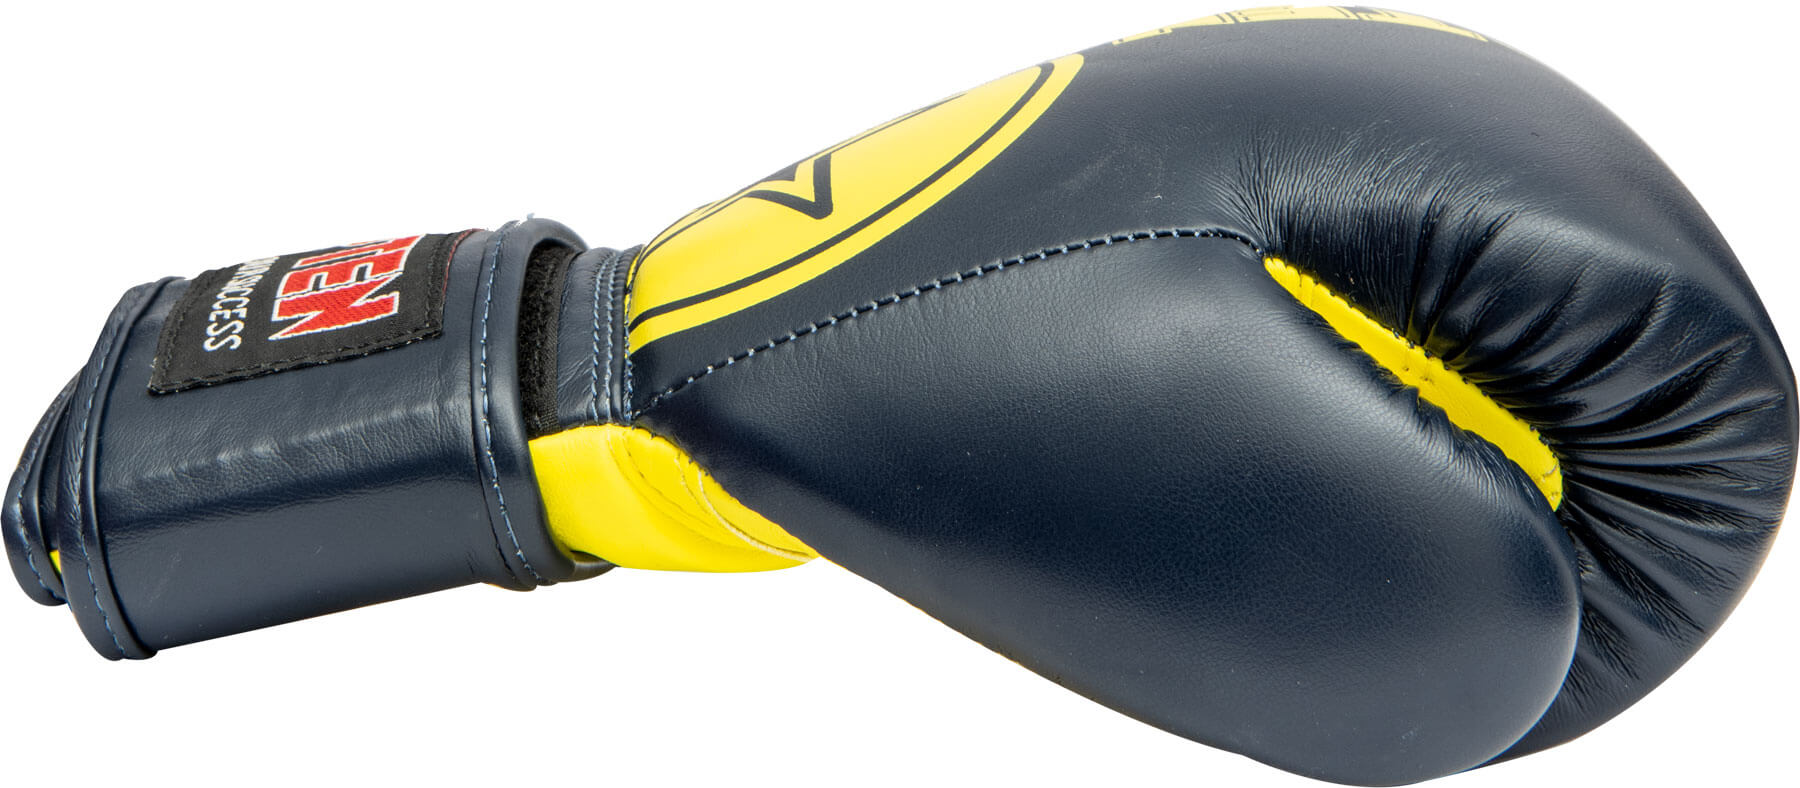 top-ten-boxing-gloves-kids-23461-blue-yellow side